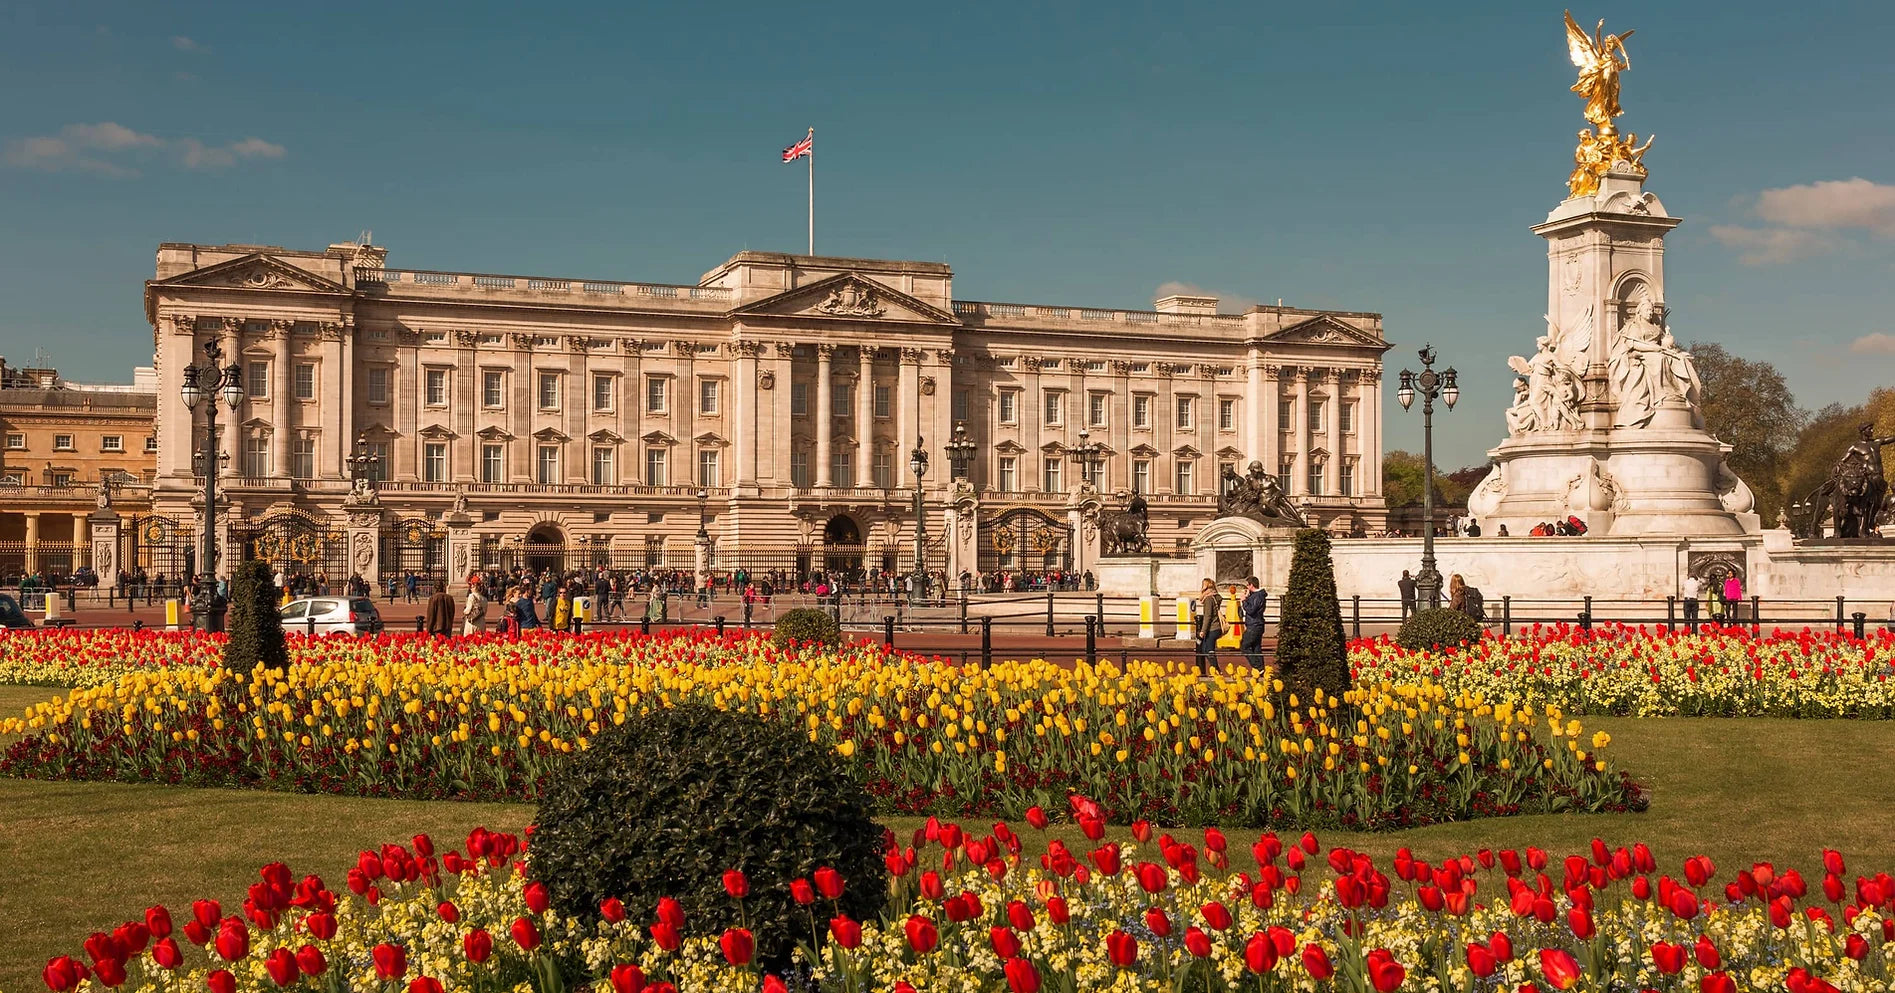 London - The Murder by Buckingham Palace